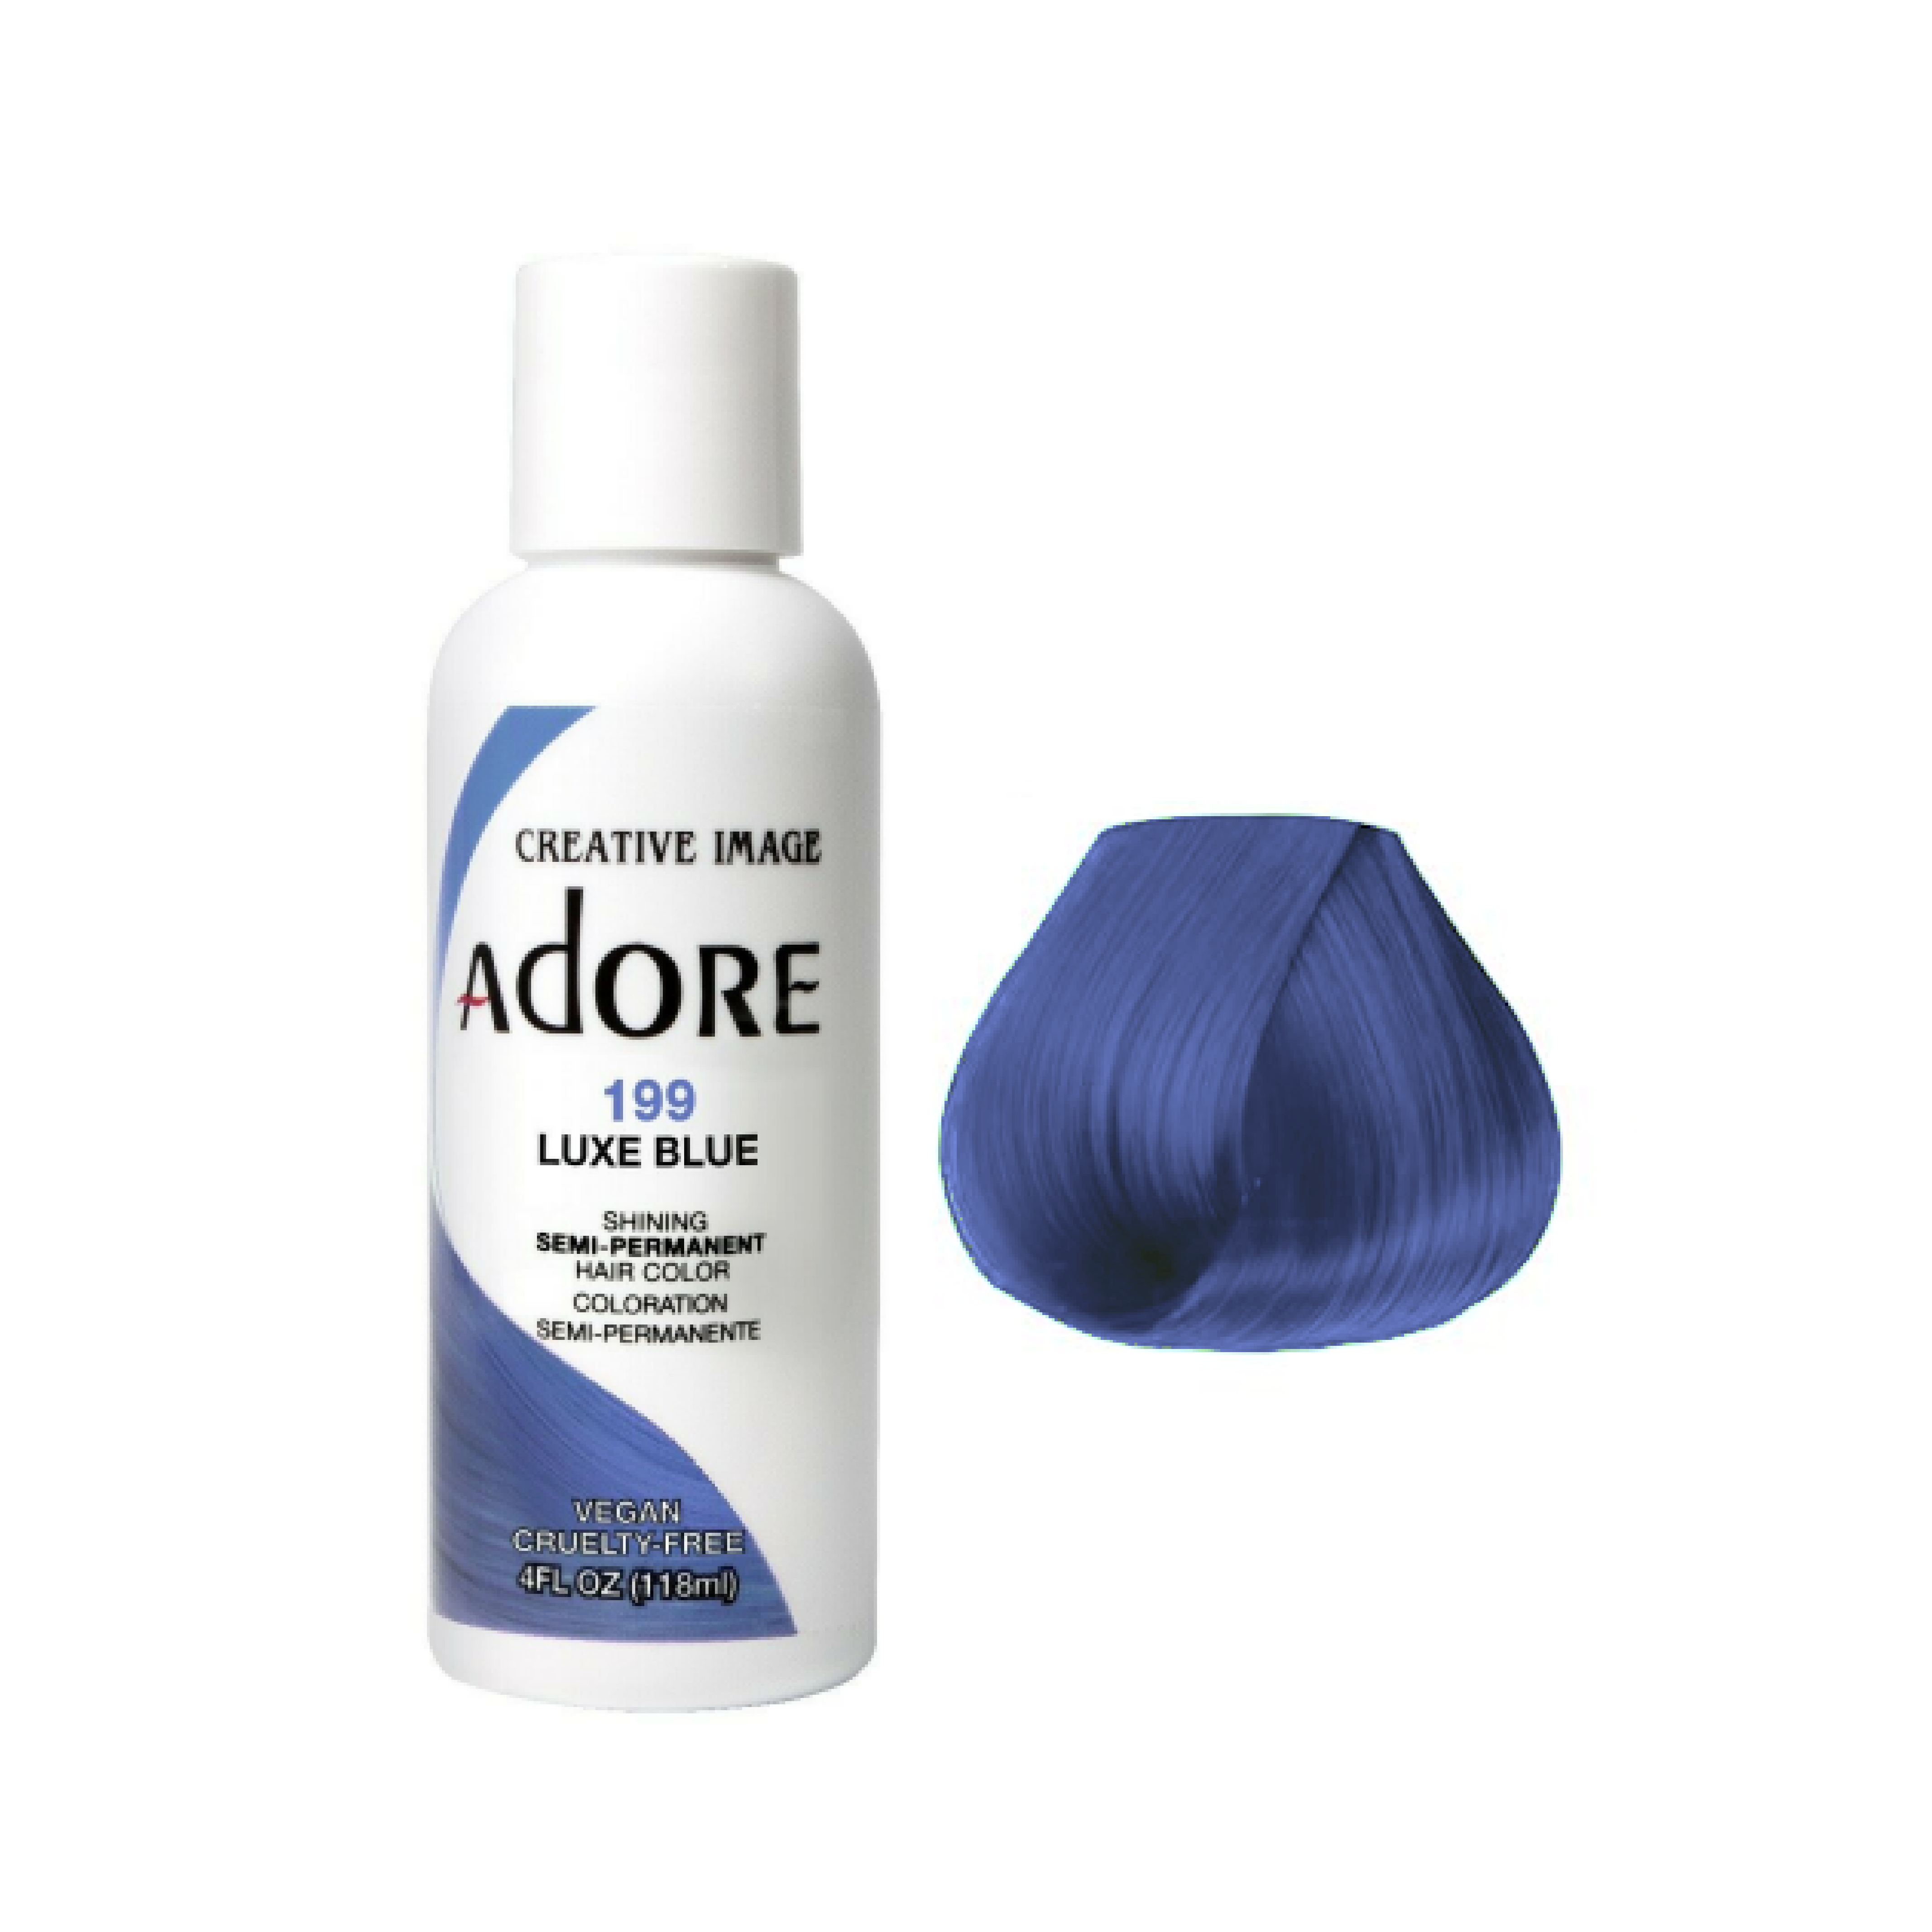 Adore Semi Permanent Luxe Blue Hair Colour 199 - 118ml